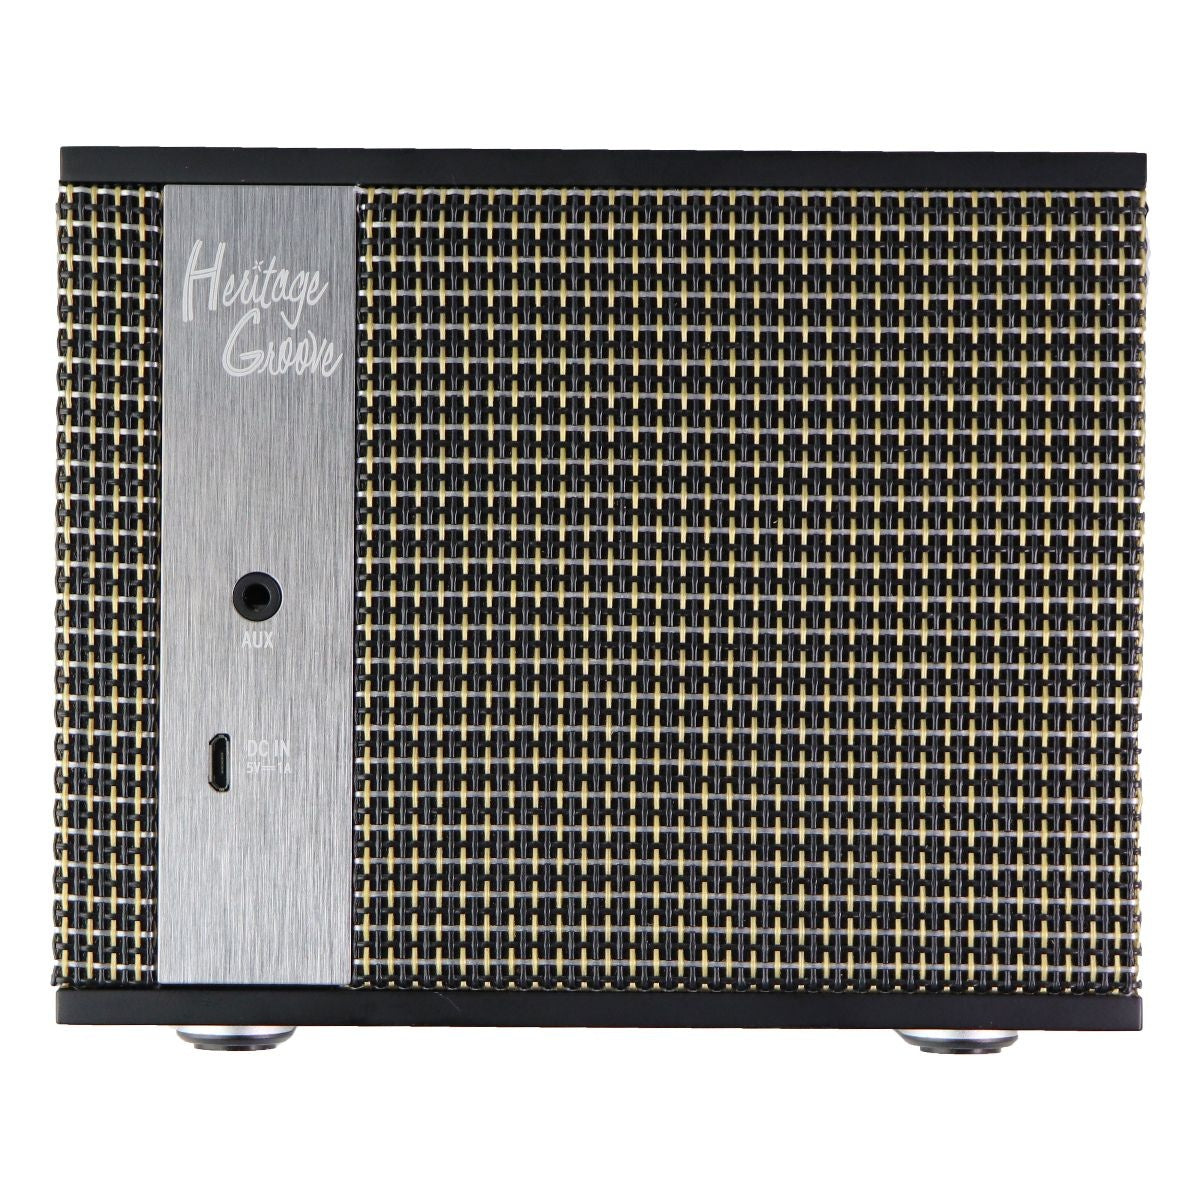 Klipsch - Heritage Series Groove Portable Bluetooth Speaker - Matte Black Home Multimedia - Home Speakers & Subwoofers Klipsch    - Simple Cell Bulk Wholesale Pricing - USA Seller